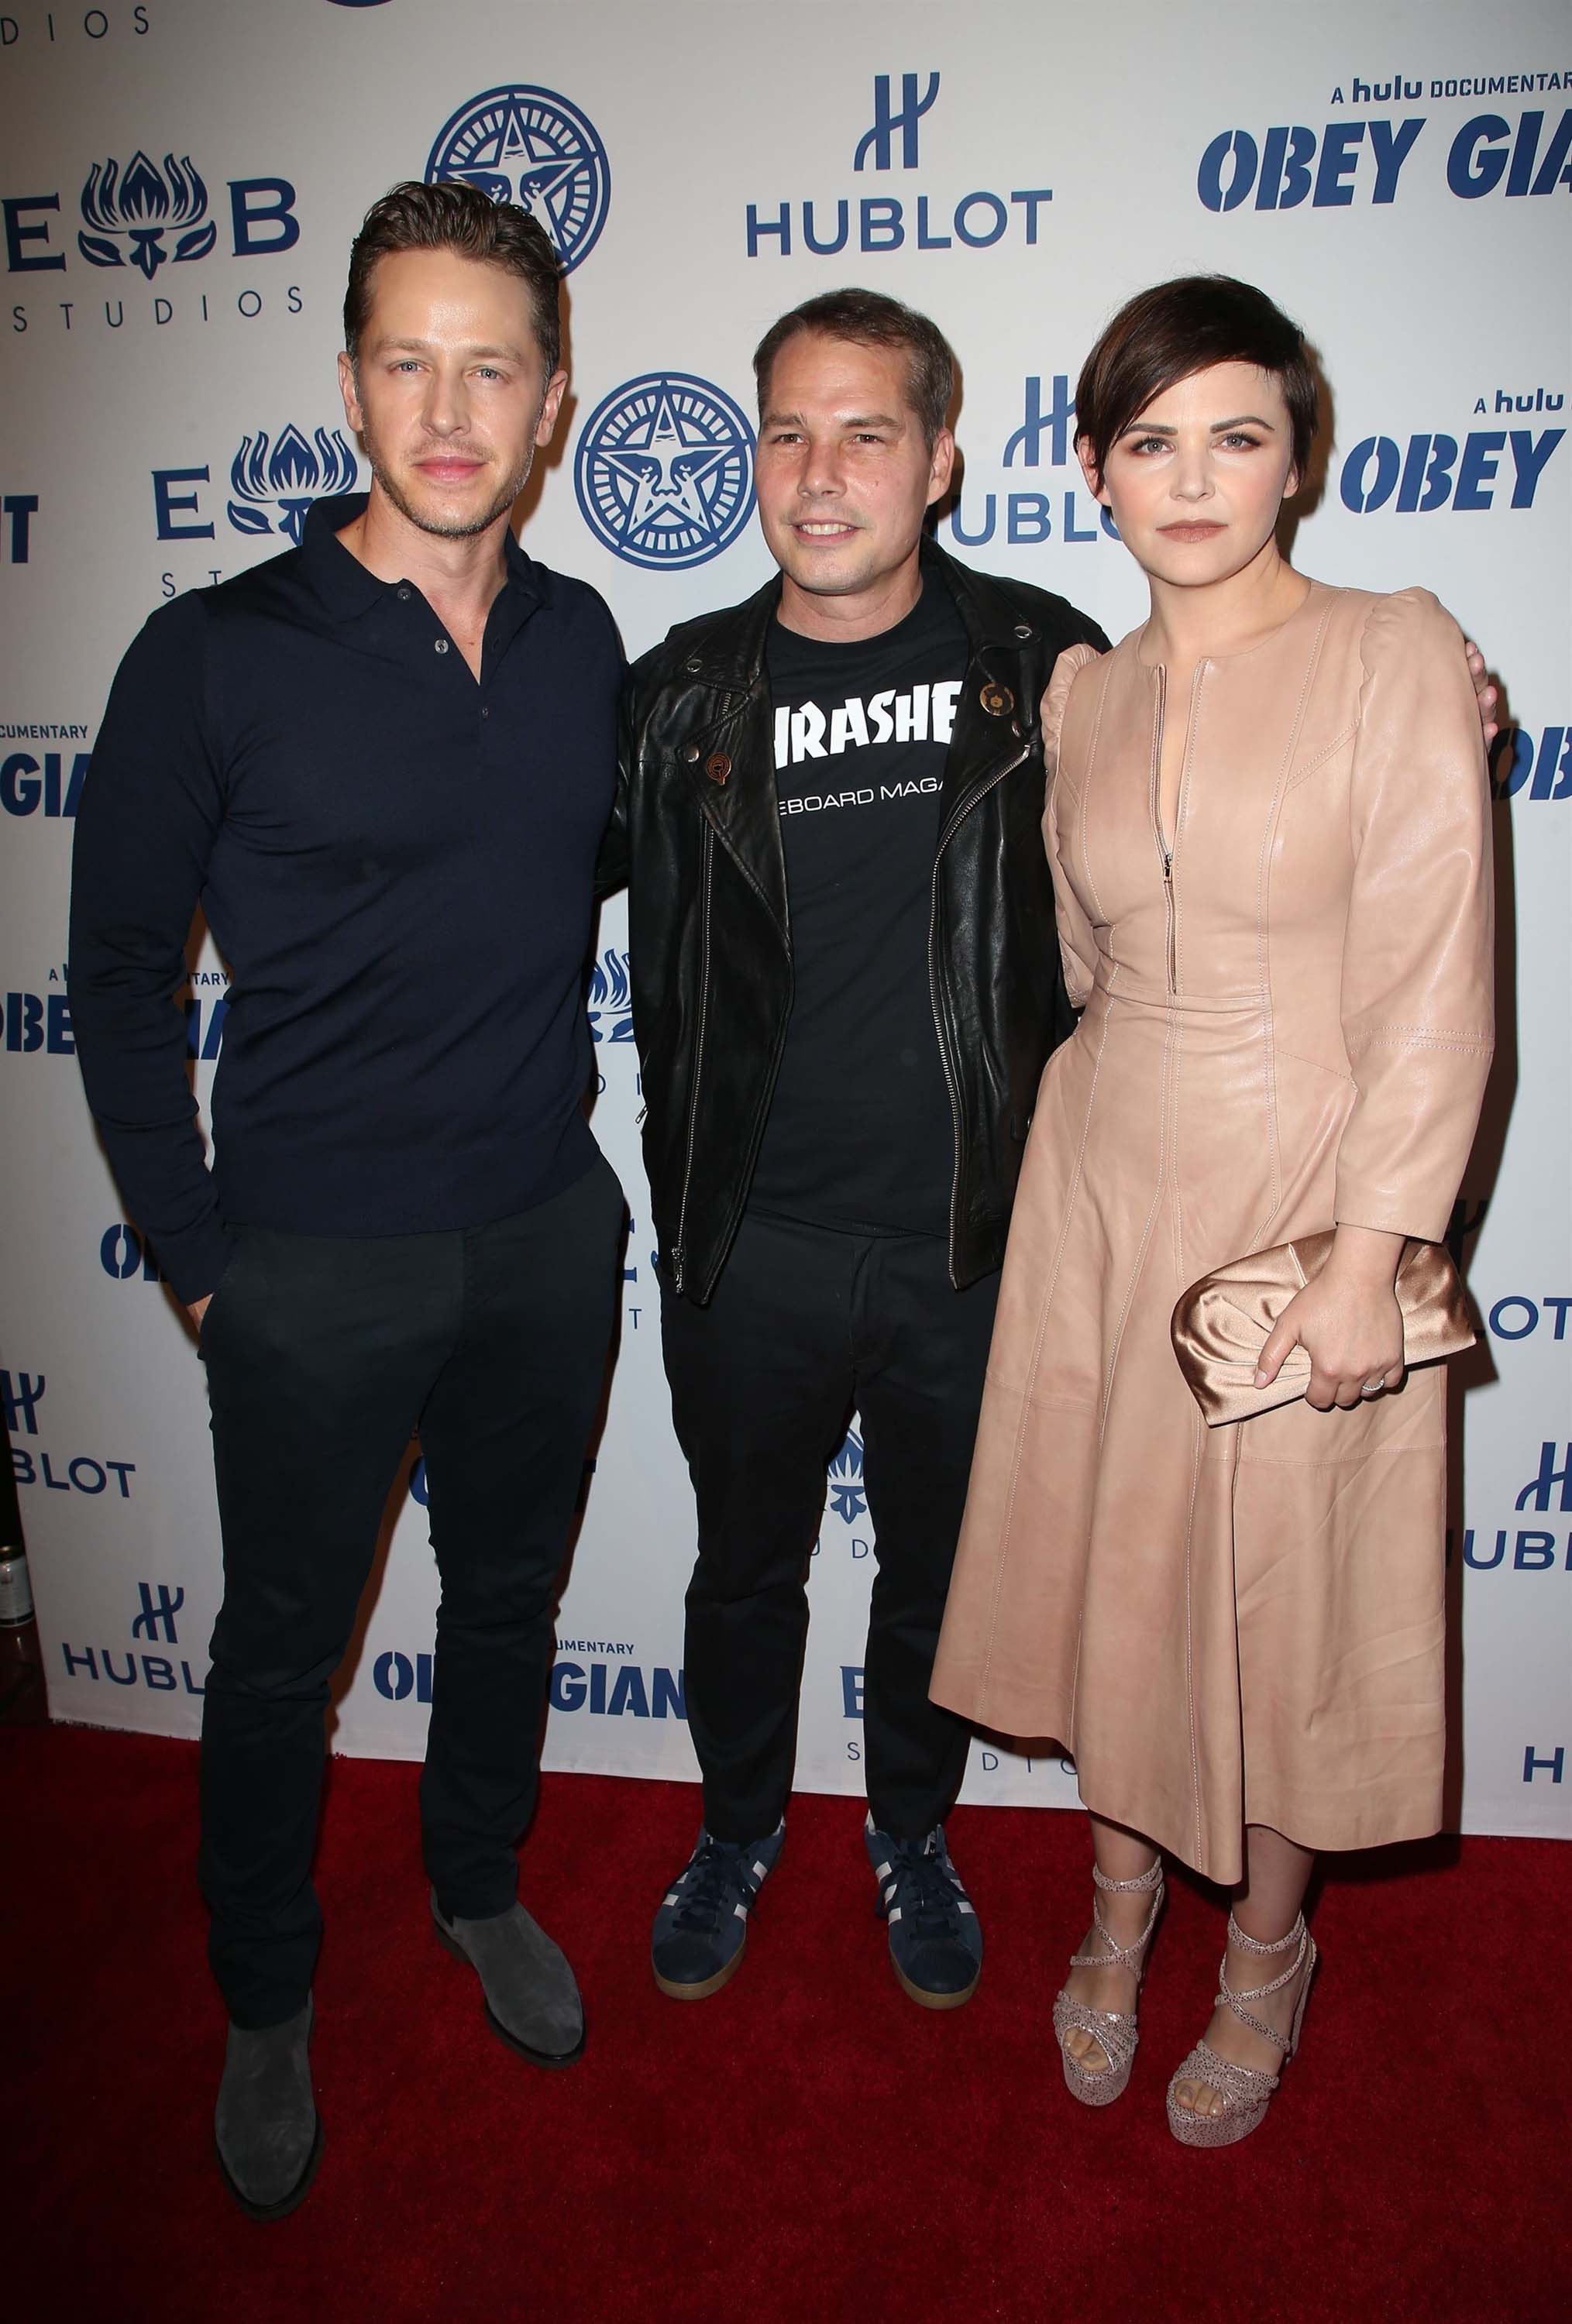 Ginnifer Goodwin attends Hulu’s ‘Obey Giant’ Premiere